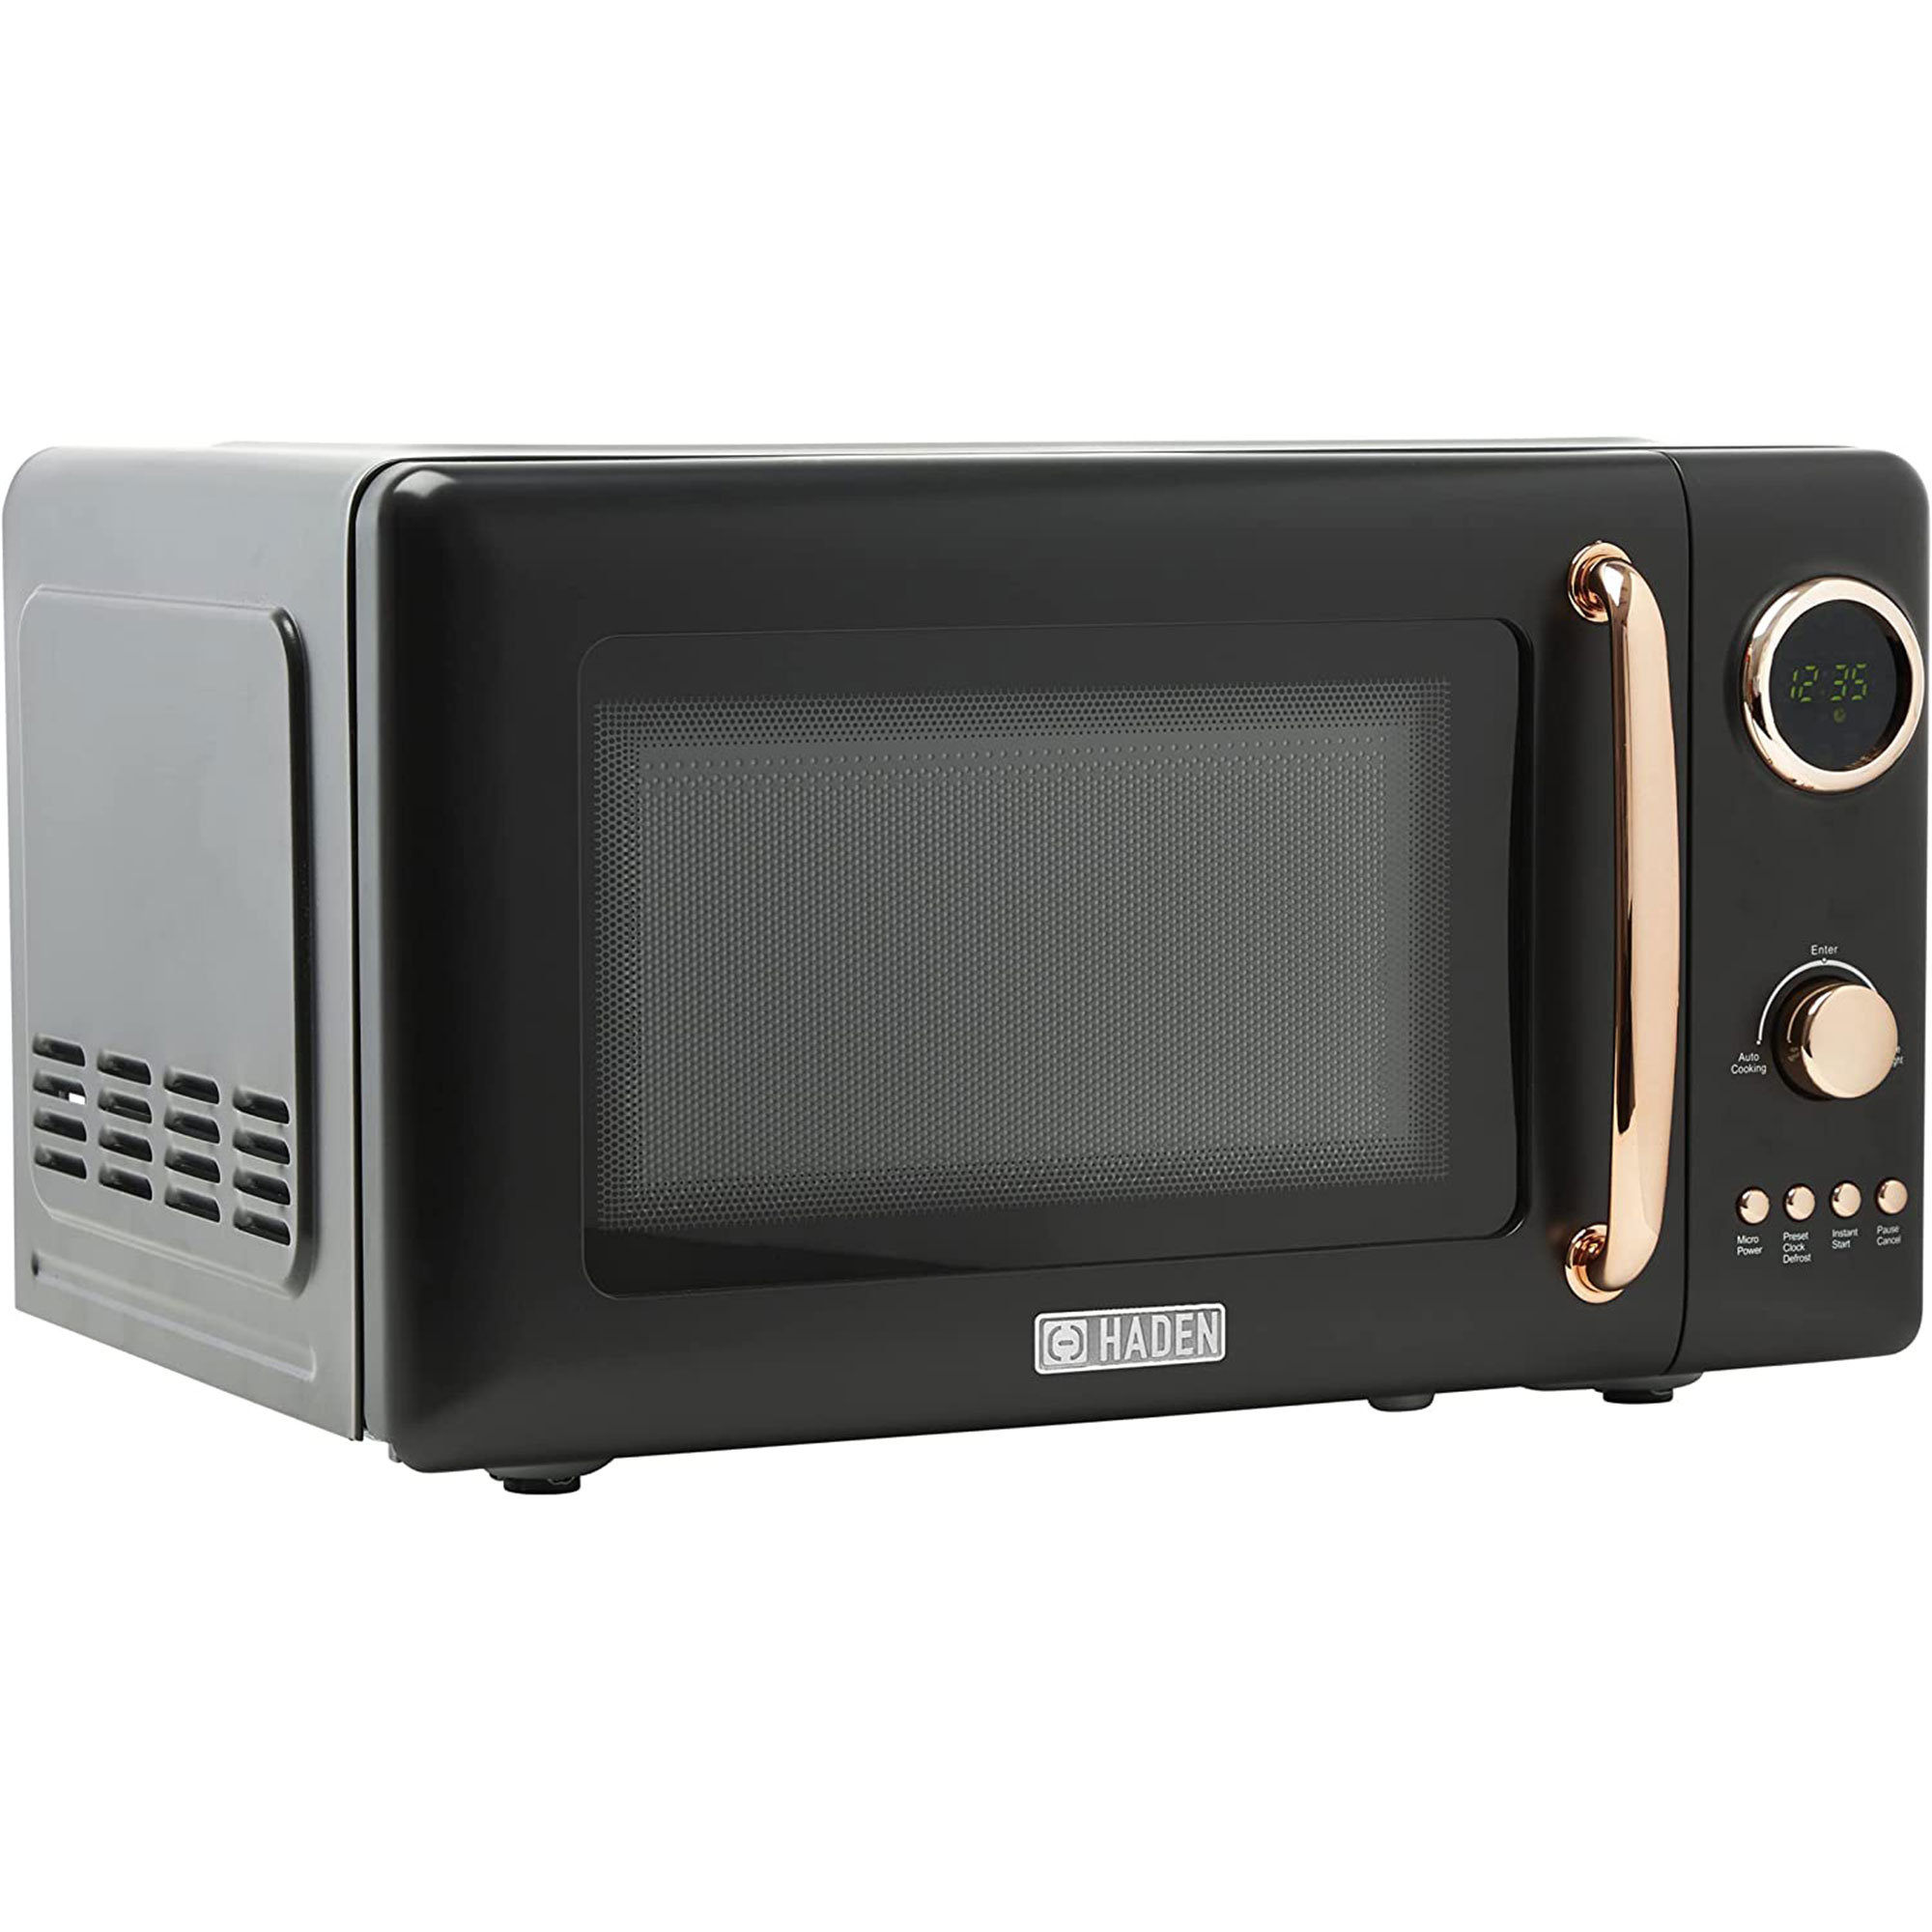 Farberware Classic 1.1 Cubic Foot 1000 Watt Microwave Oven, Copper 